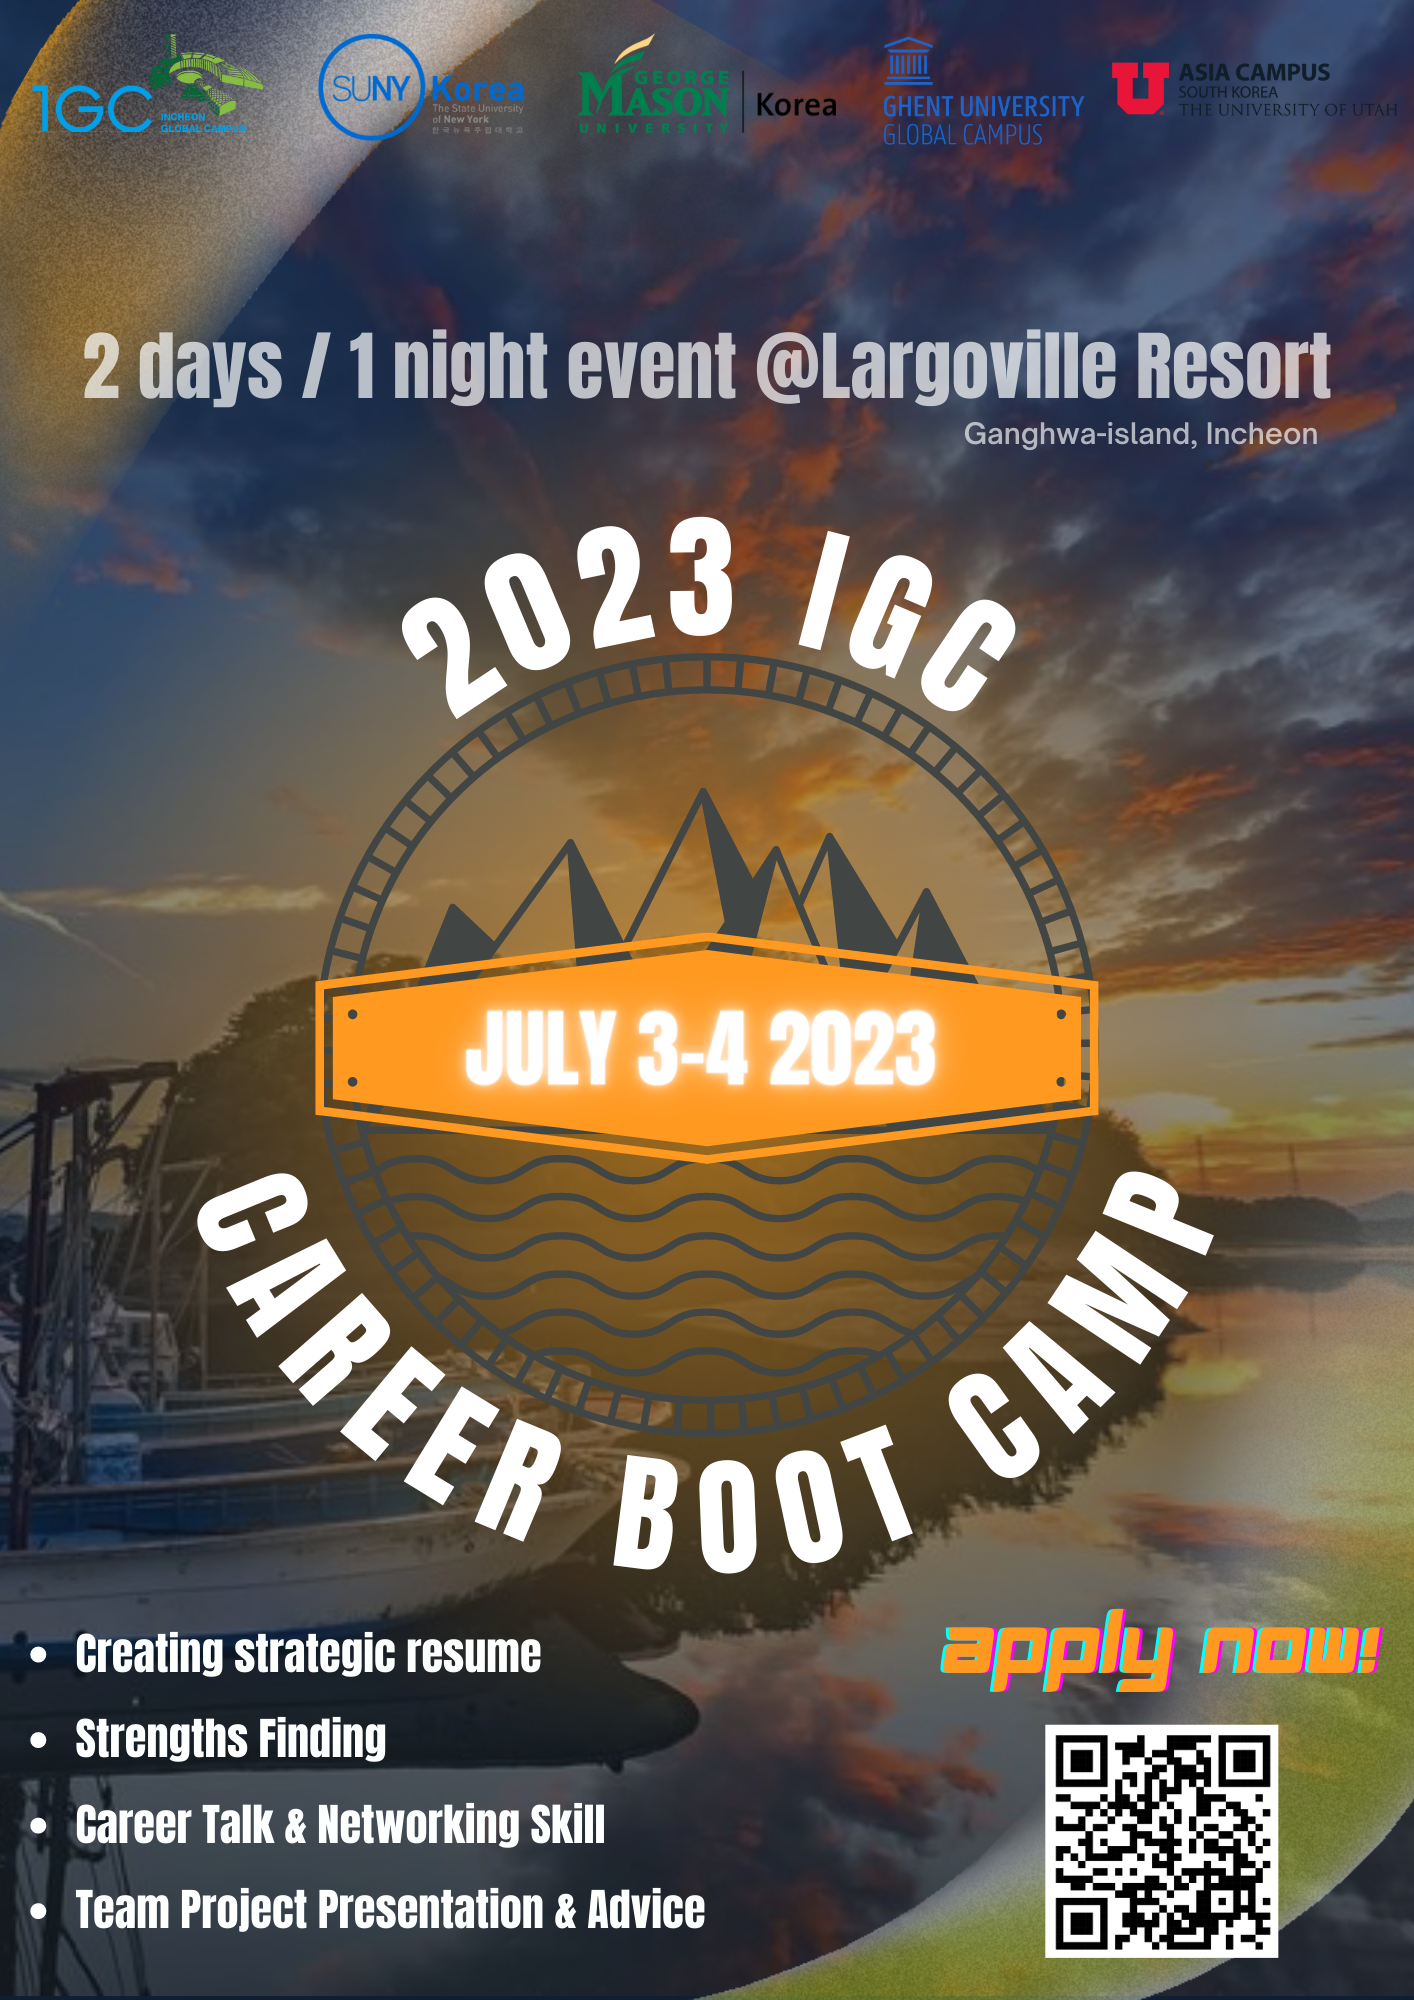 1GC INCHEON GLOBAL CAMPUS. SUNY Korea. GEORGE MASON UNIVERSITY Korea. GHENT UNIVERSITY GLOBAL CAMPUS ASIA CAMPUS SOUTH KOREA THE UNIVERSITY OF UTAH. 2days/1night event@Largoville Resort Ganghwa-island, Incheon 2023 IGC, JULY 3-4 2023 CAREER BOOT CAMP Crating strategic resume. Strengths Finding. Career Talk & Networking Skill. Team Project Presentation & Advice / apply now! QR코드(https://me-qr.com/ko/Hpeq7K9U)